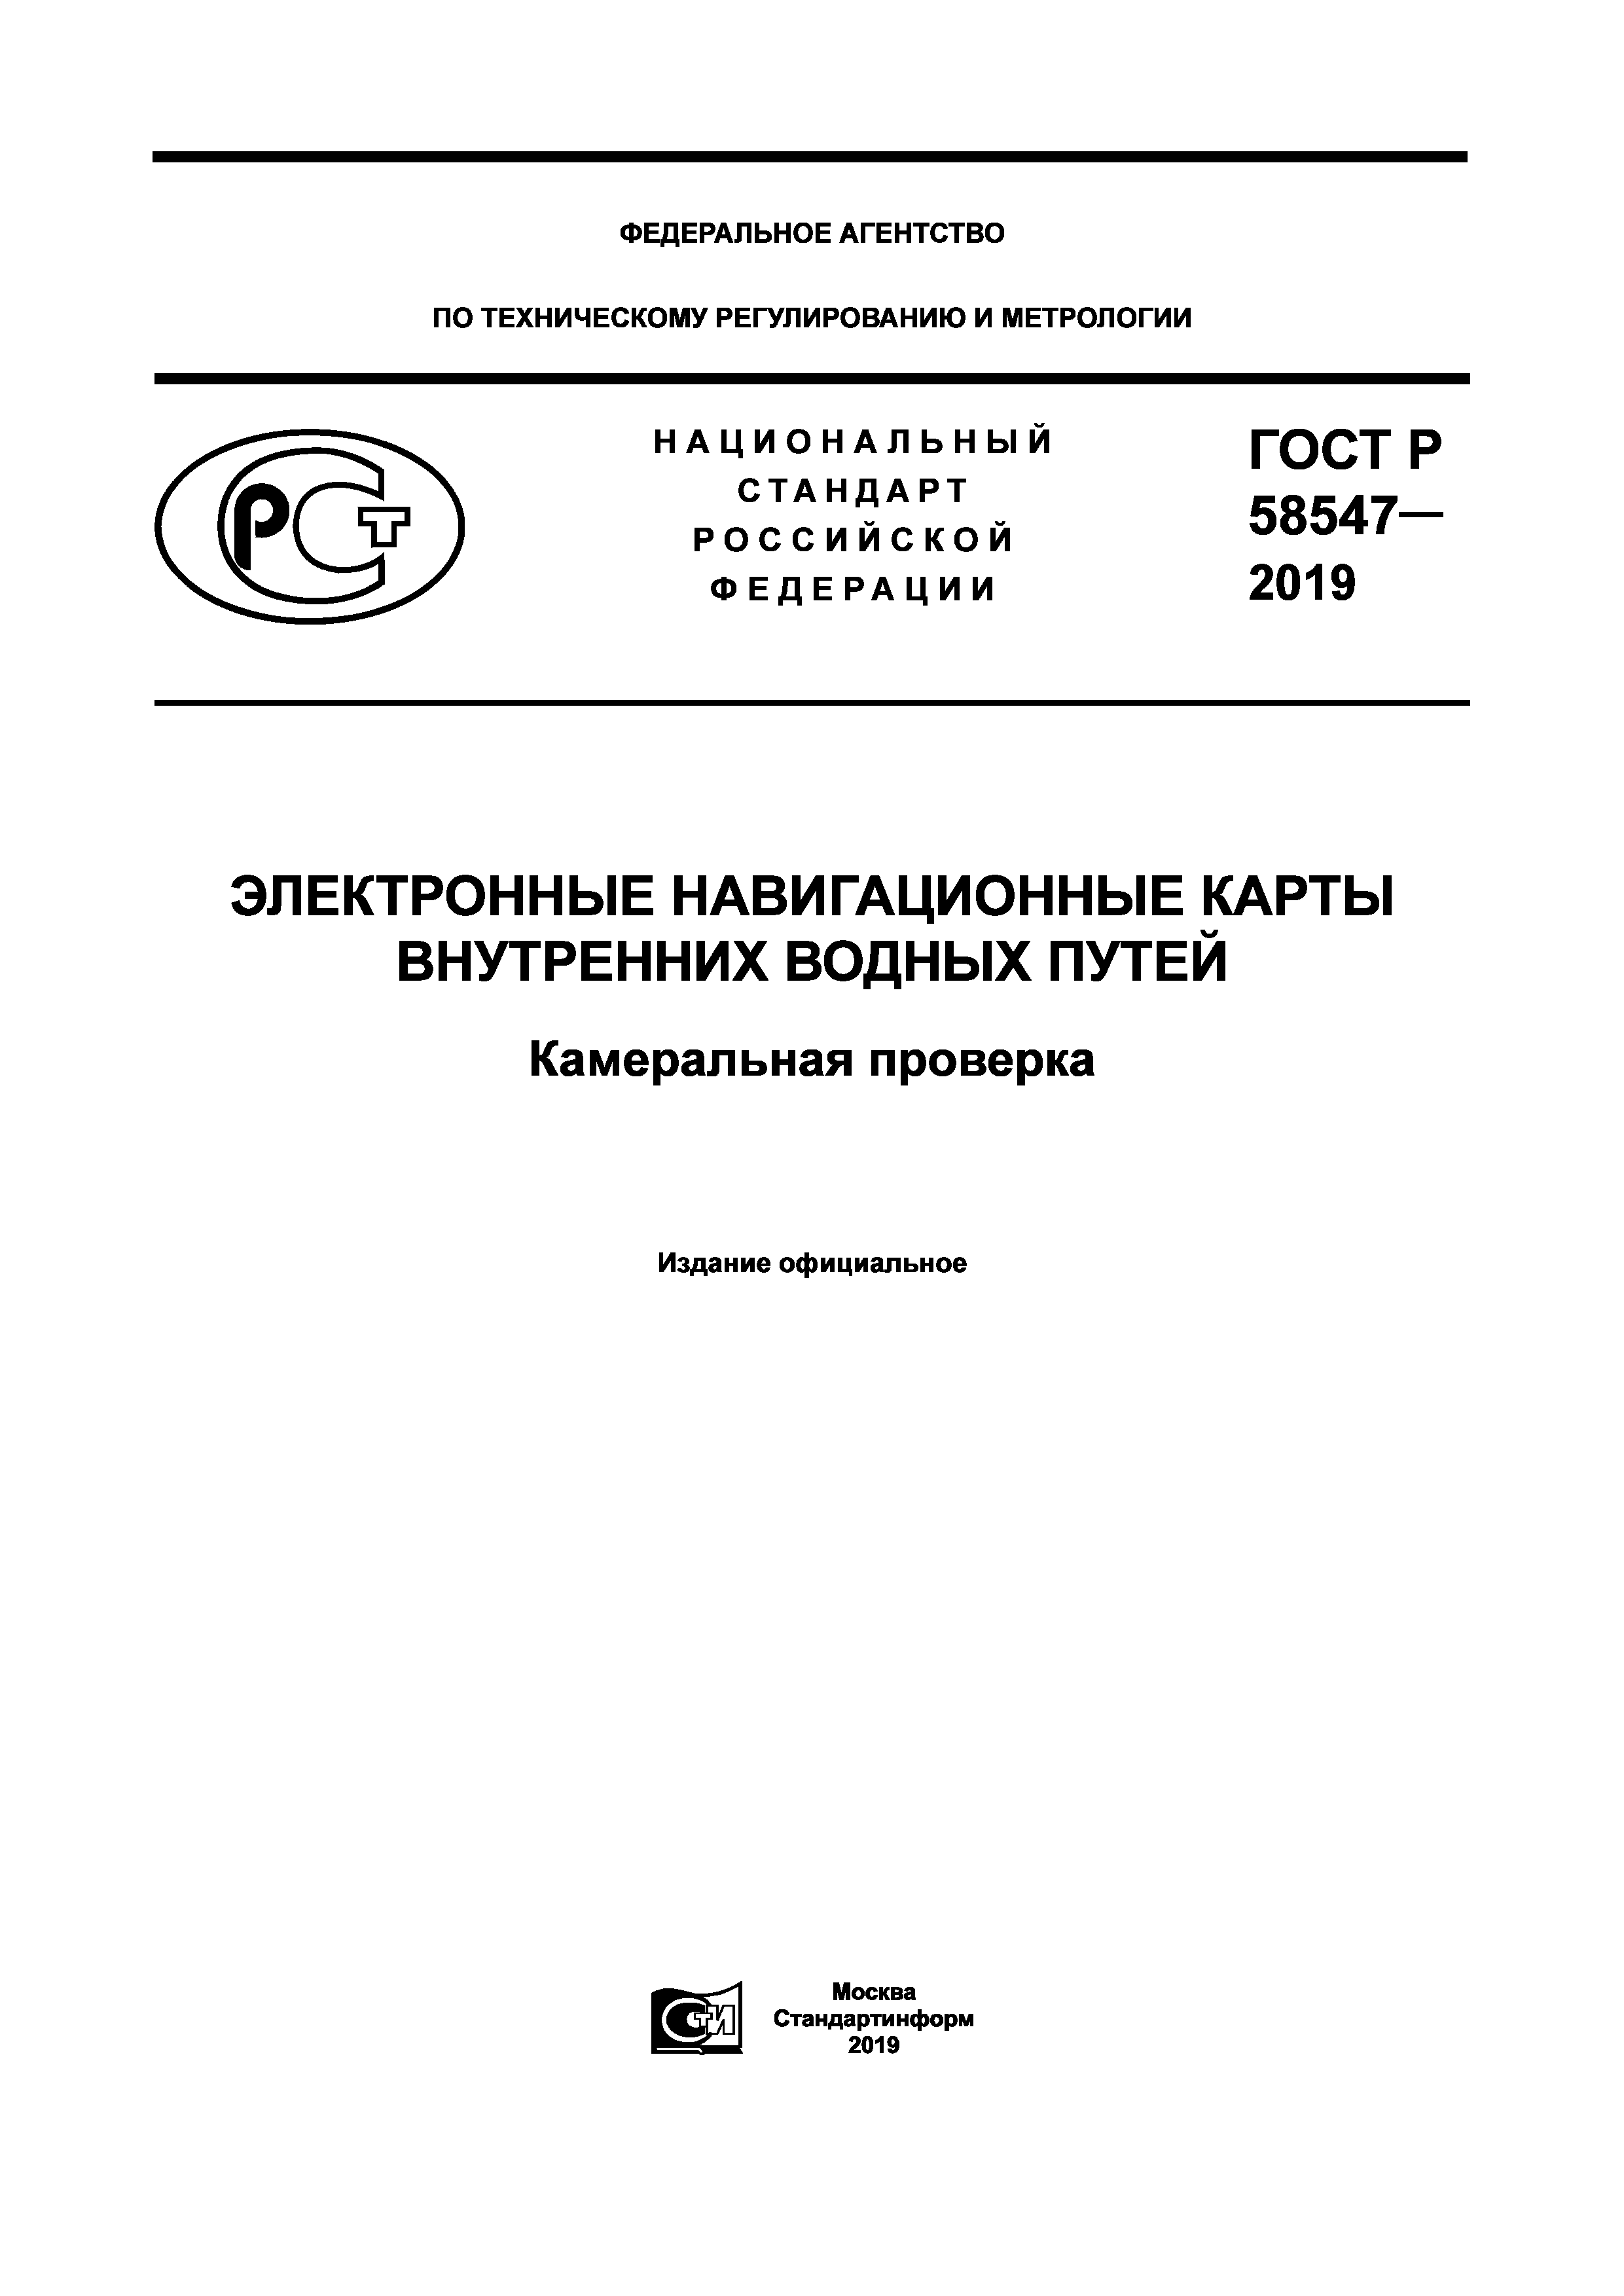 ГОСТ Р 58547-2019